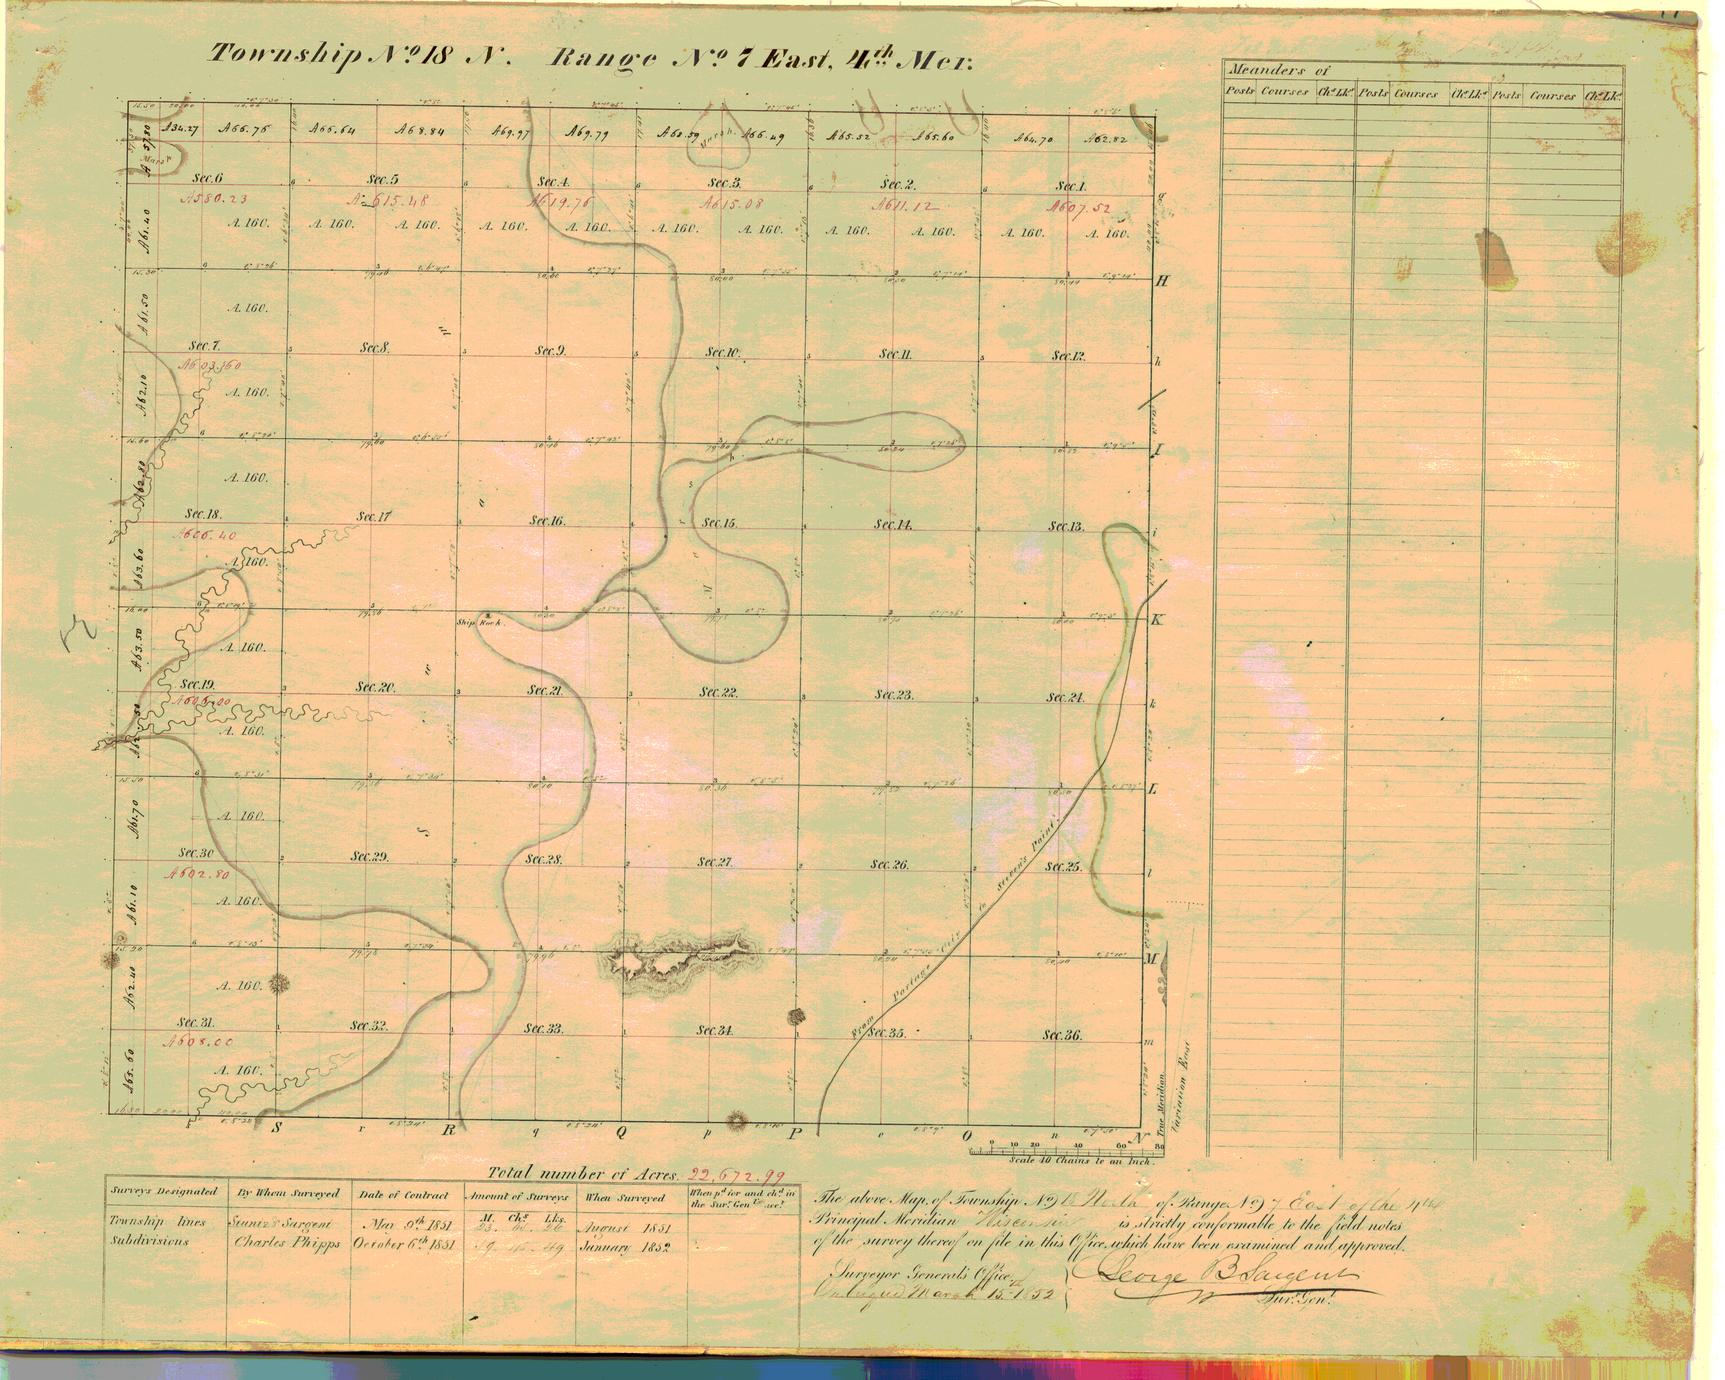 [Public Land Survey System map: Wisconsin Township 18 North, Range 07 East]